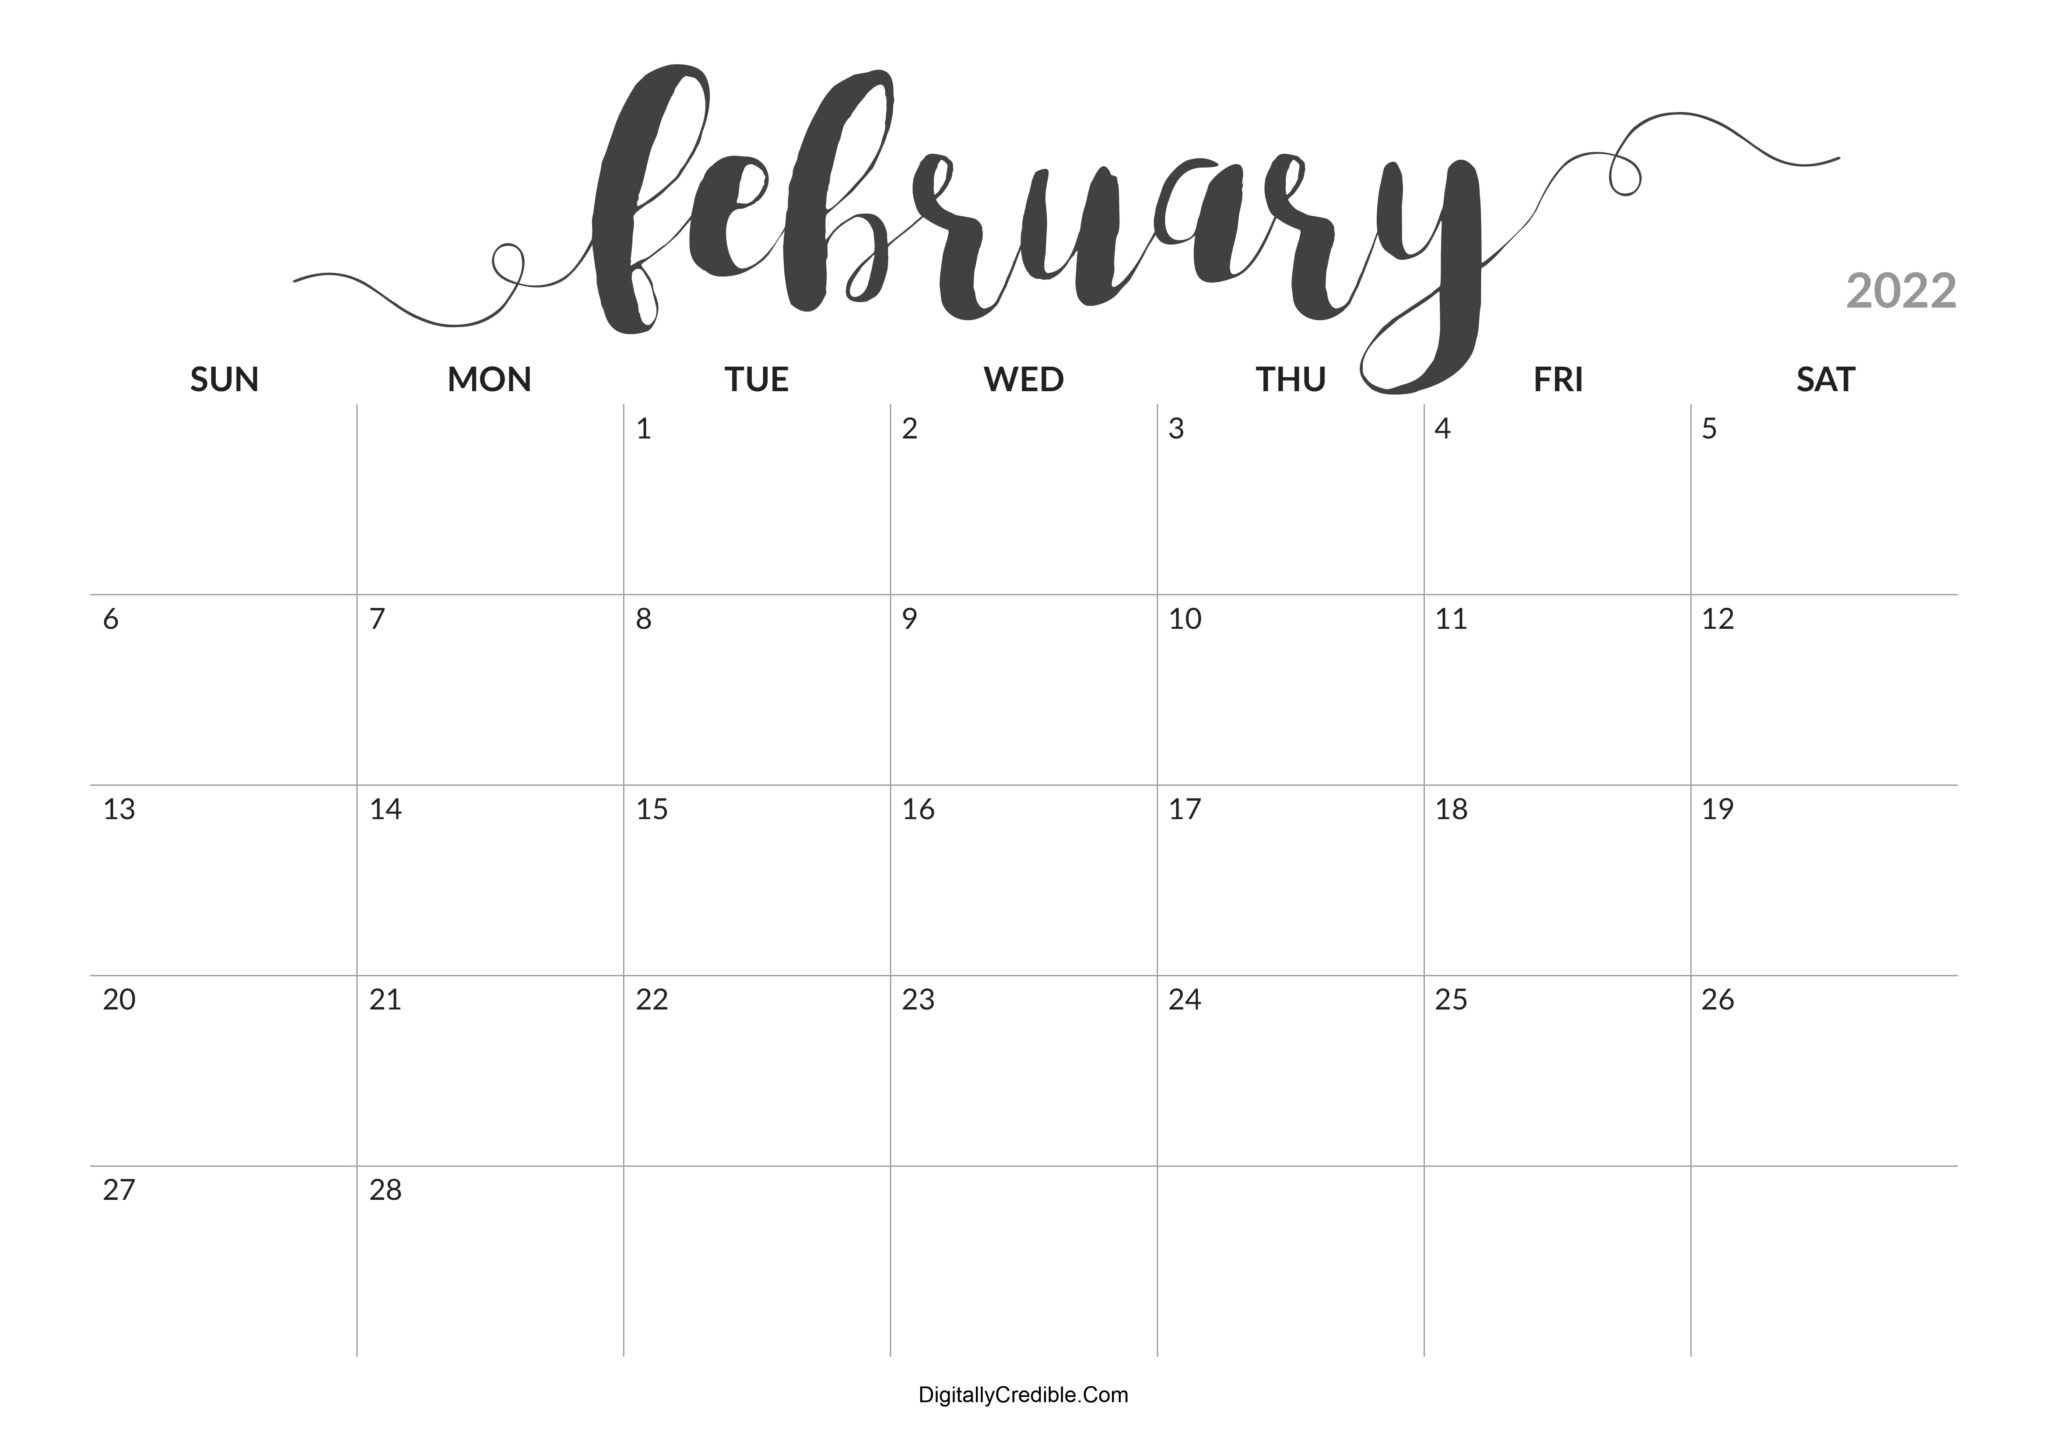 February 2022 Calendar Printable - Desk &amp; Wall - Digitallycredible